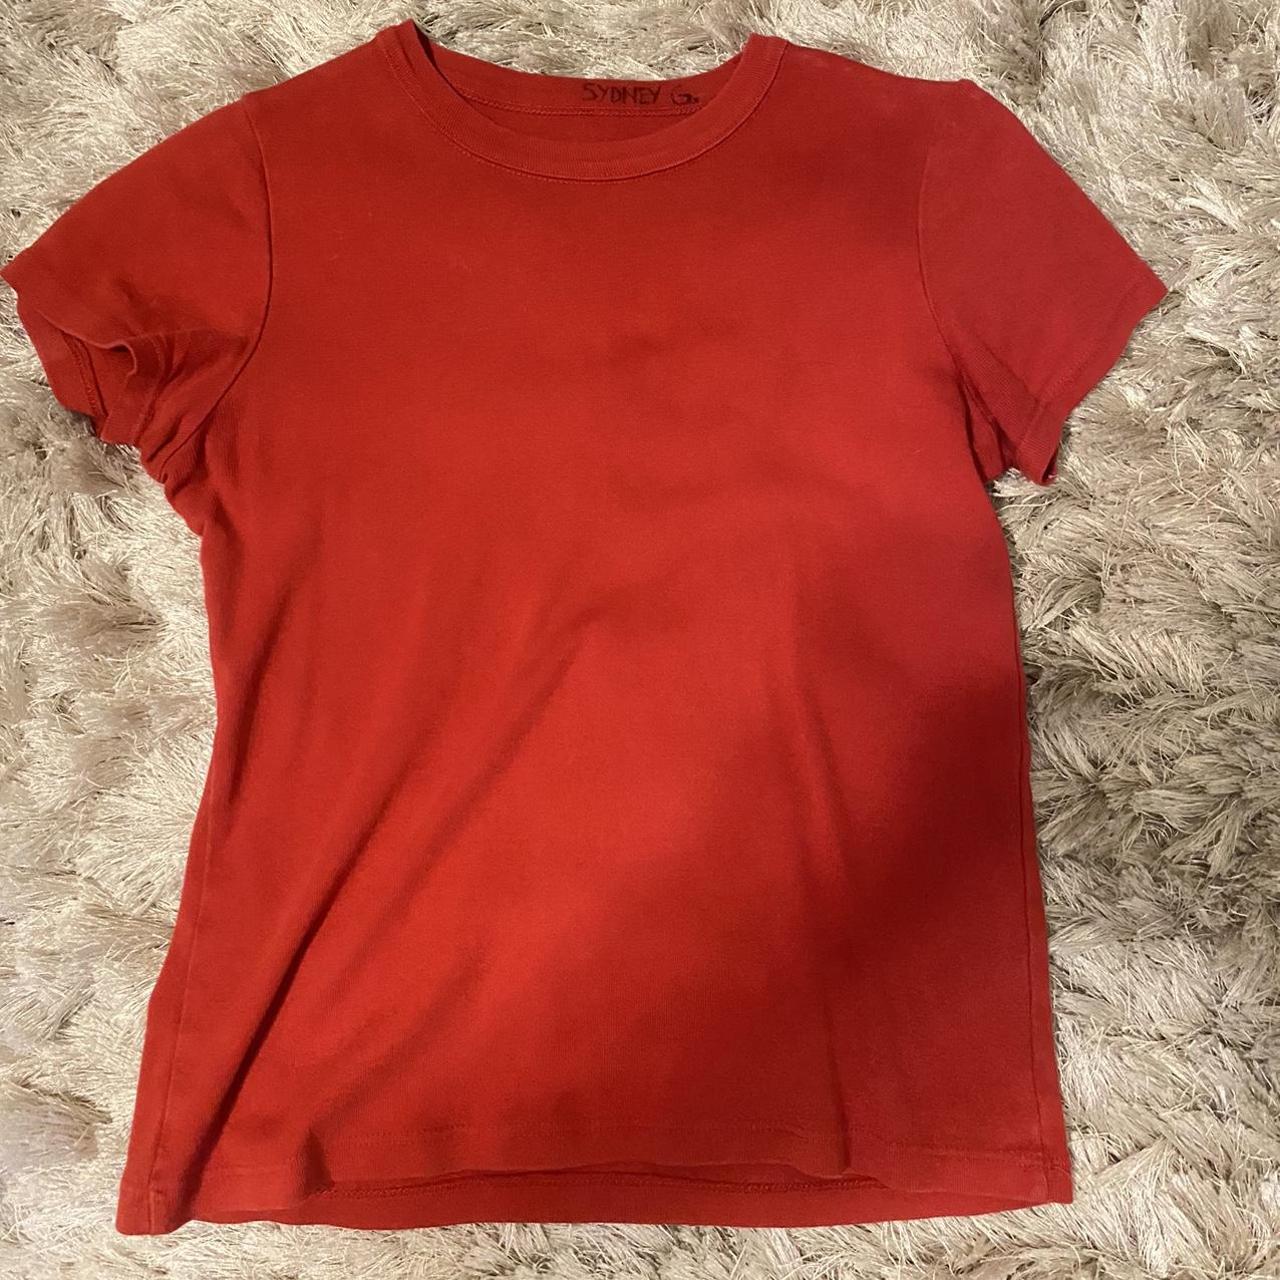 Red brandy melville t shirt